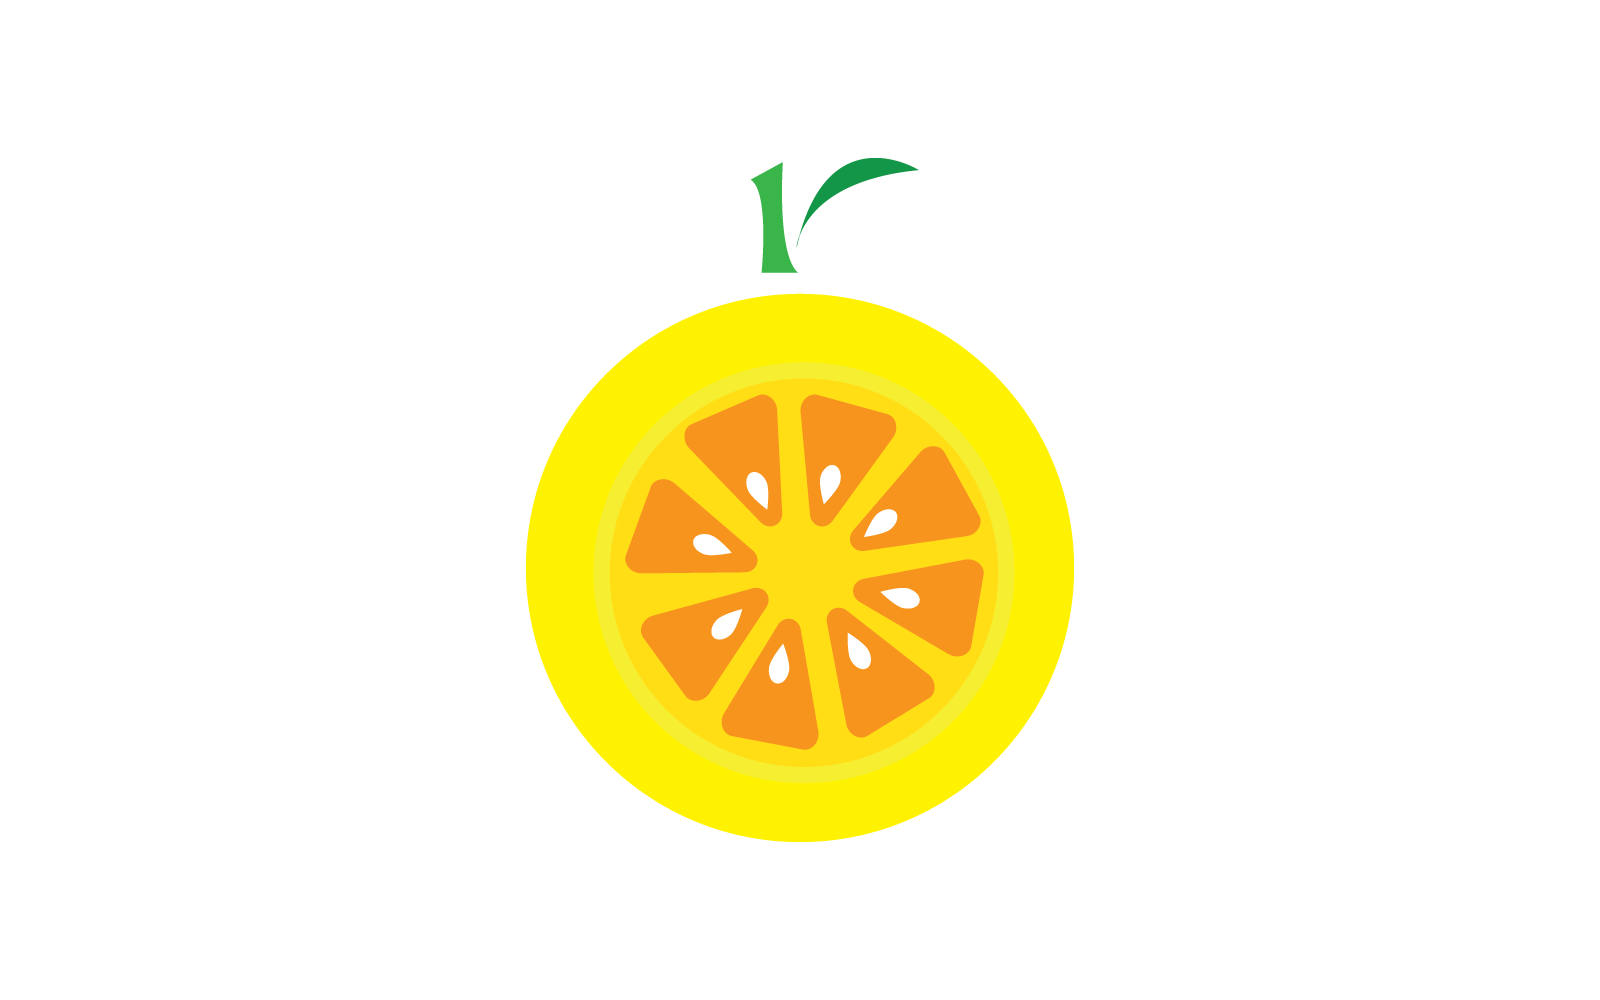 Orange fruit logo design illustration icon vector